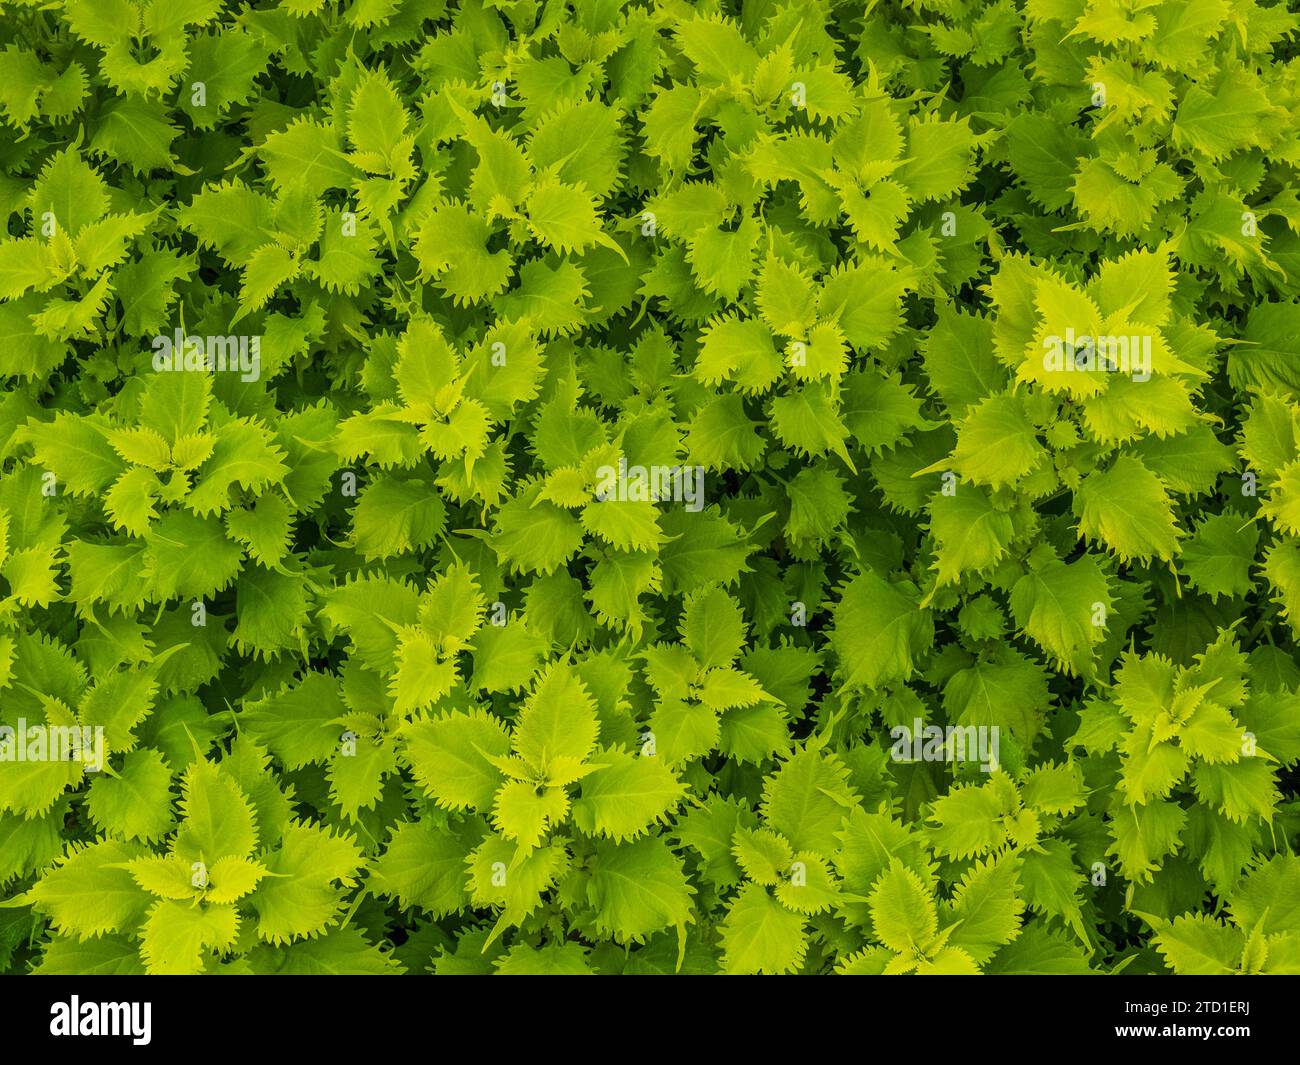 Green Beeksteak plant also known as Perilla Mint or Wild Basil Stock Photo